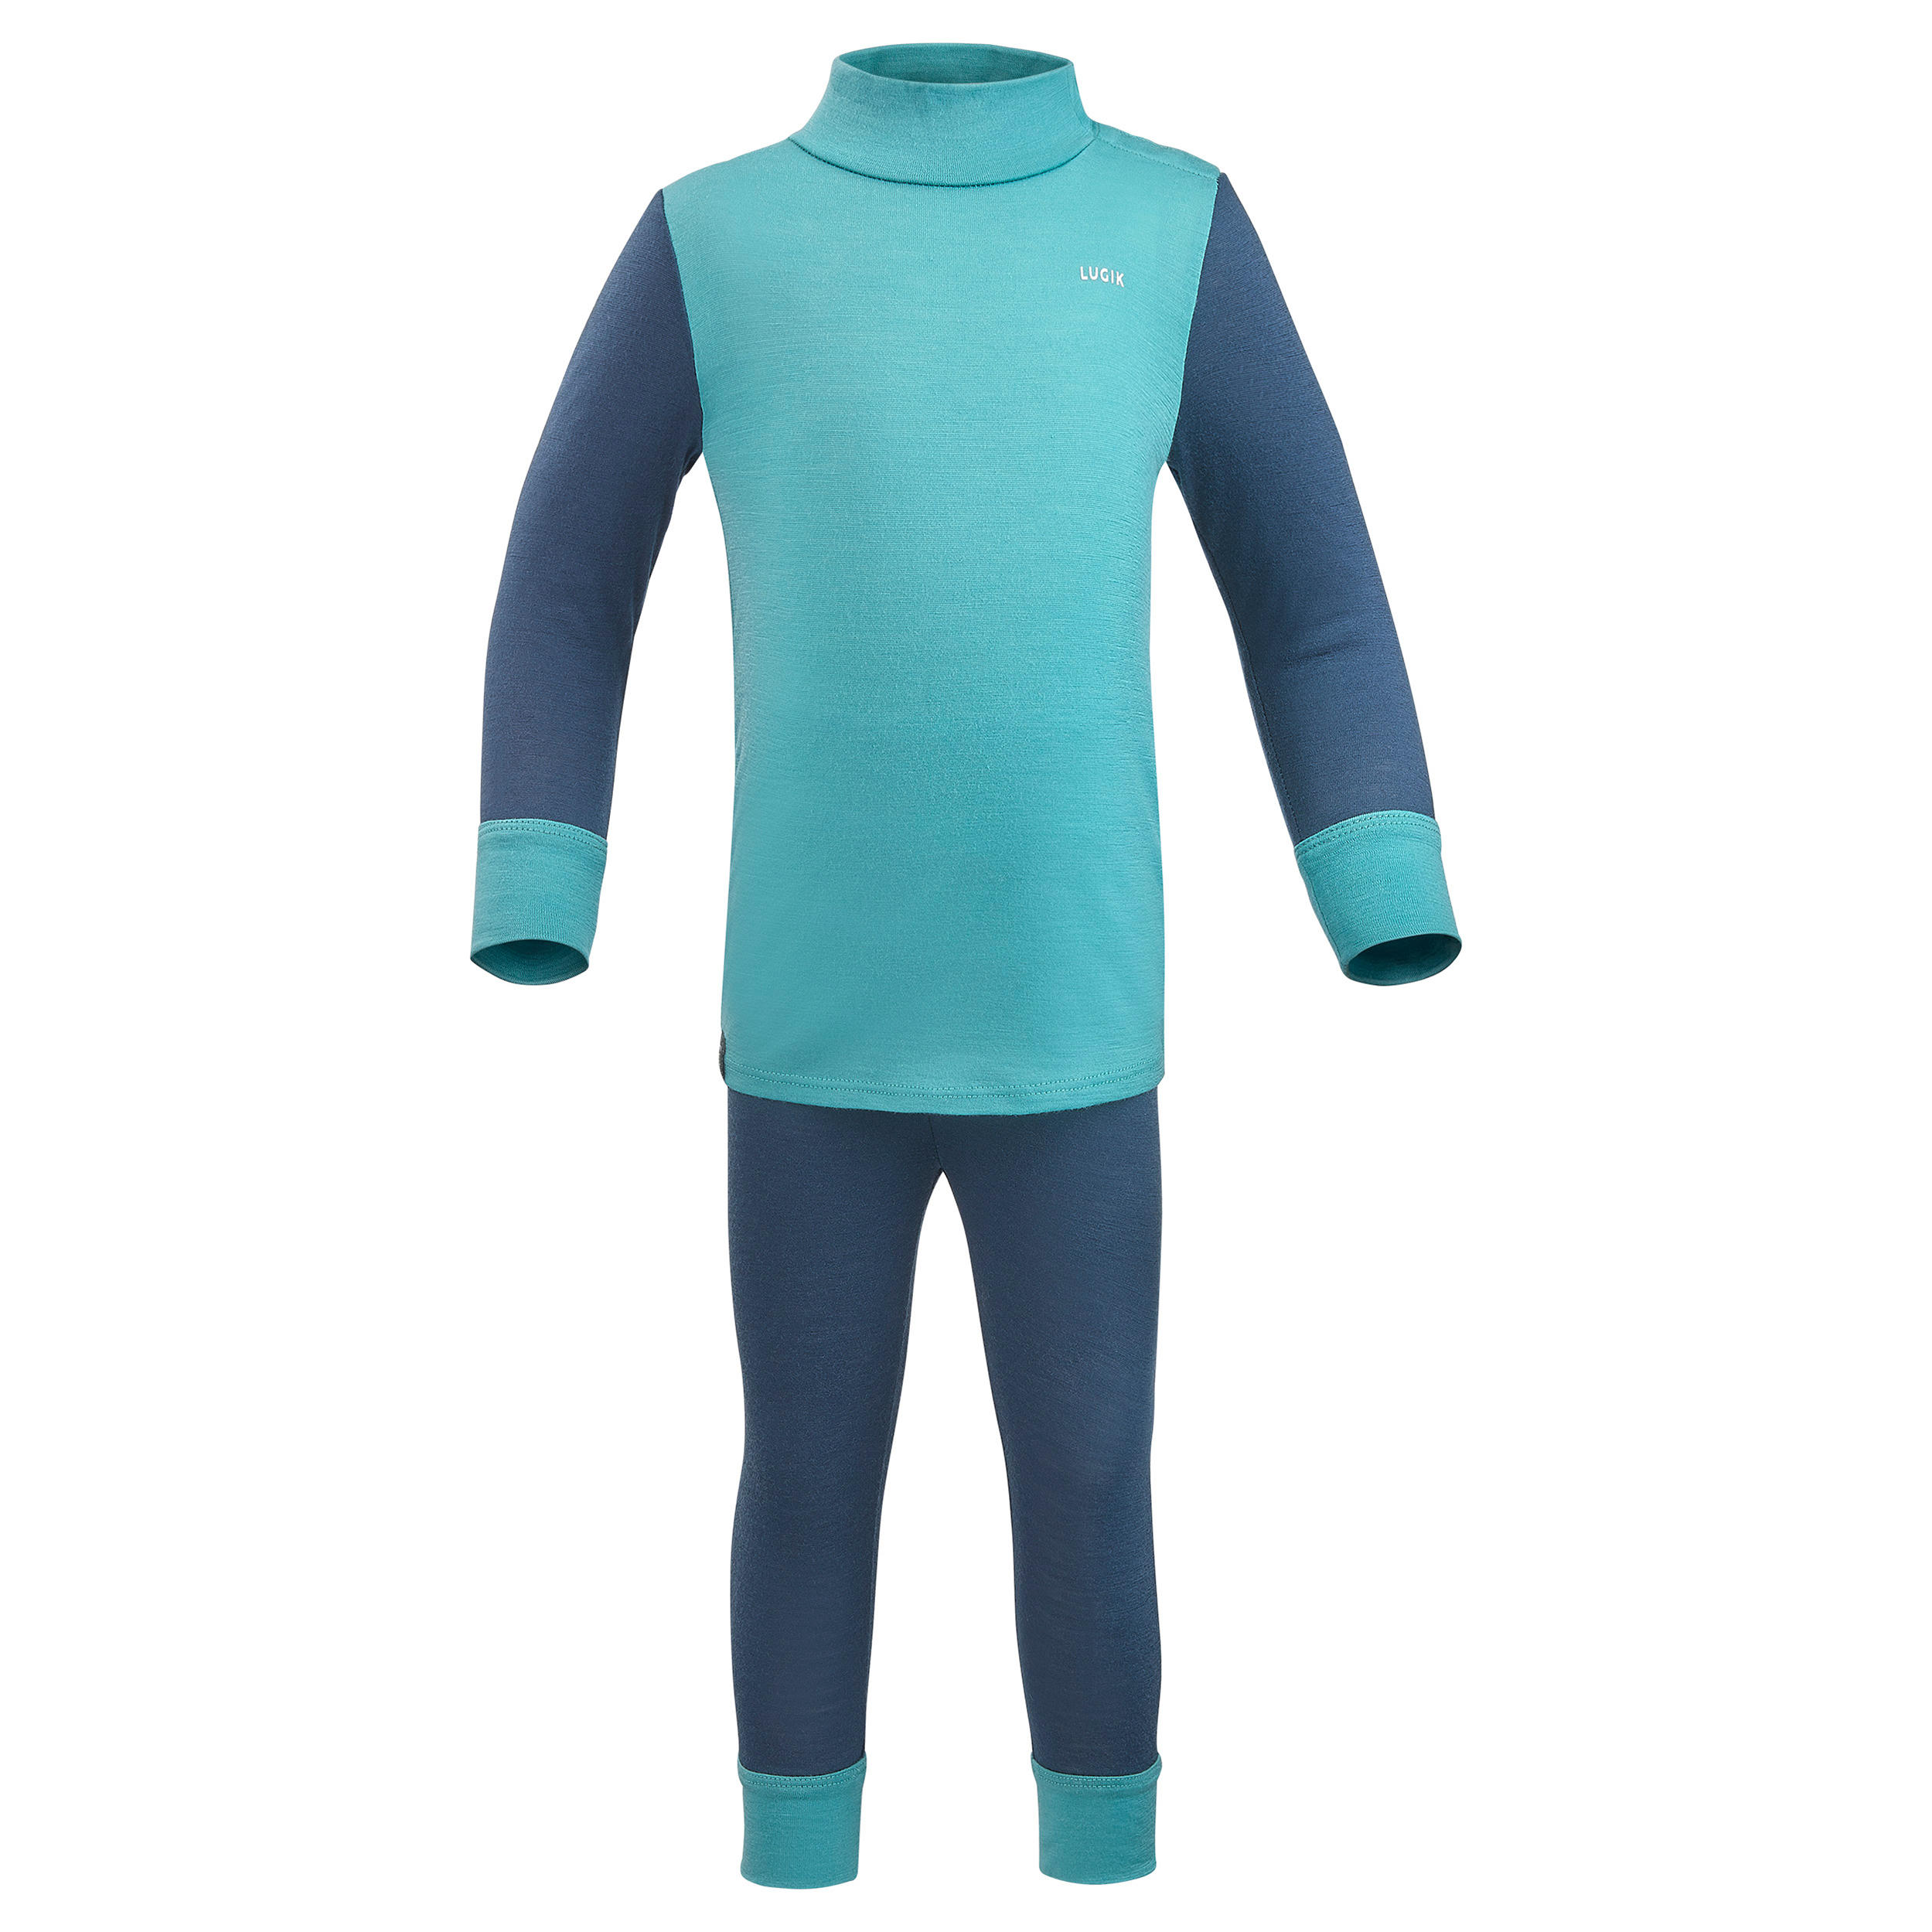 Kids' Merino Wool Base Layer Top - 900 Blue - WEDZE